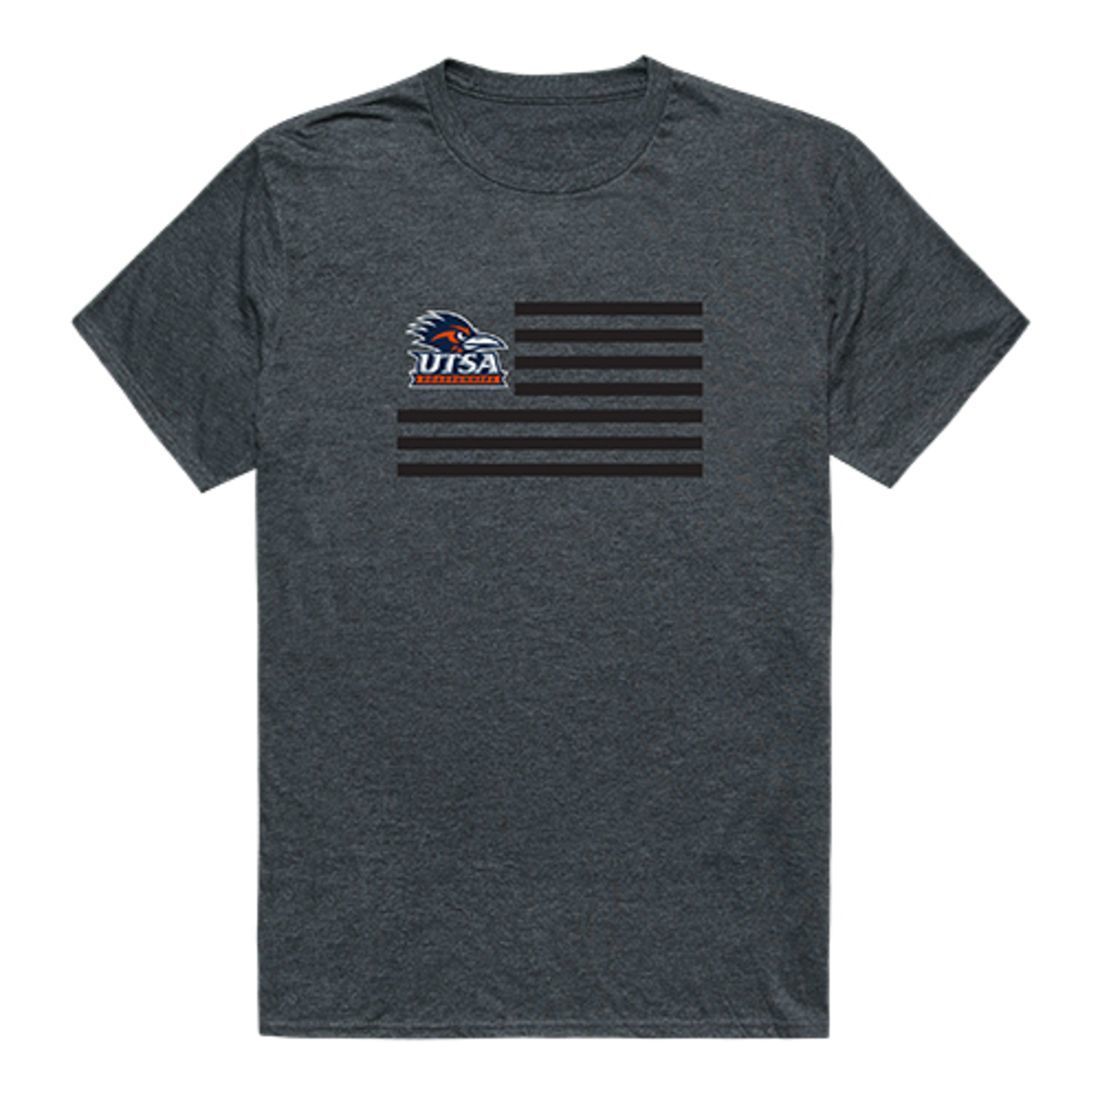 UTSA University of Texas at San Antonio Roadrunners USA Flag Tee T-Shirt Heather Charcoal-Campus-Wardrobe